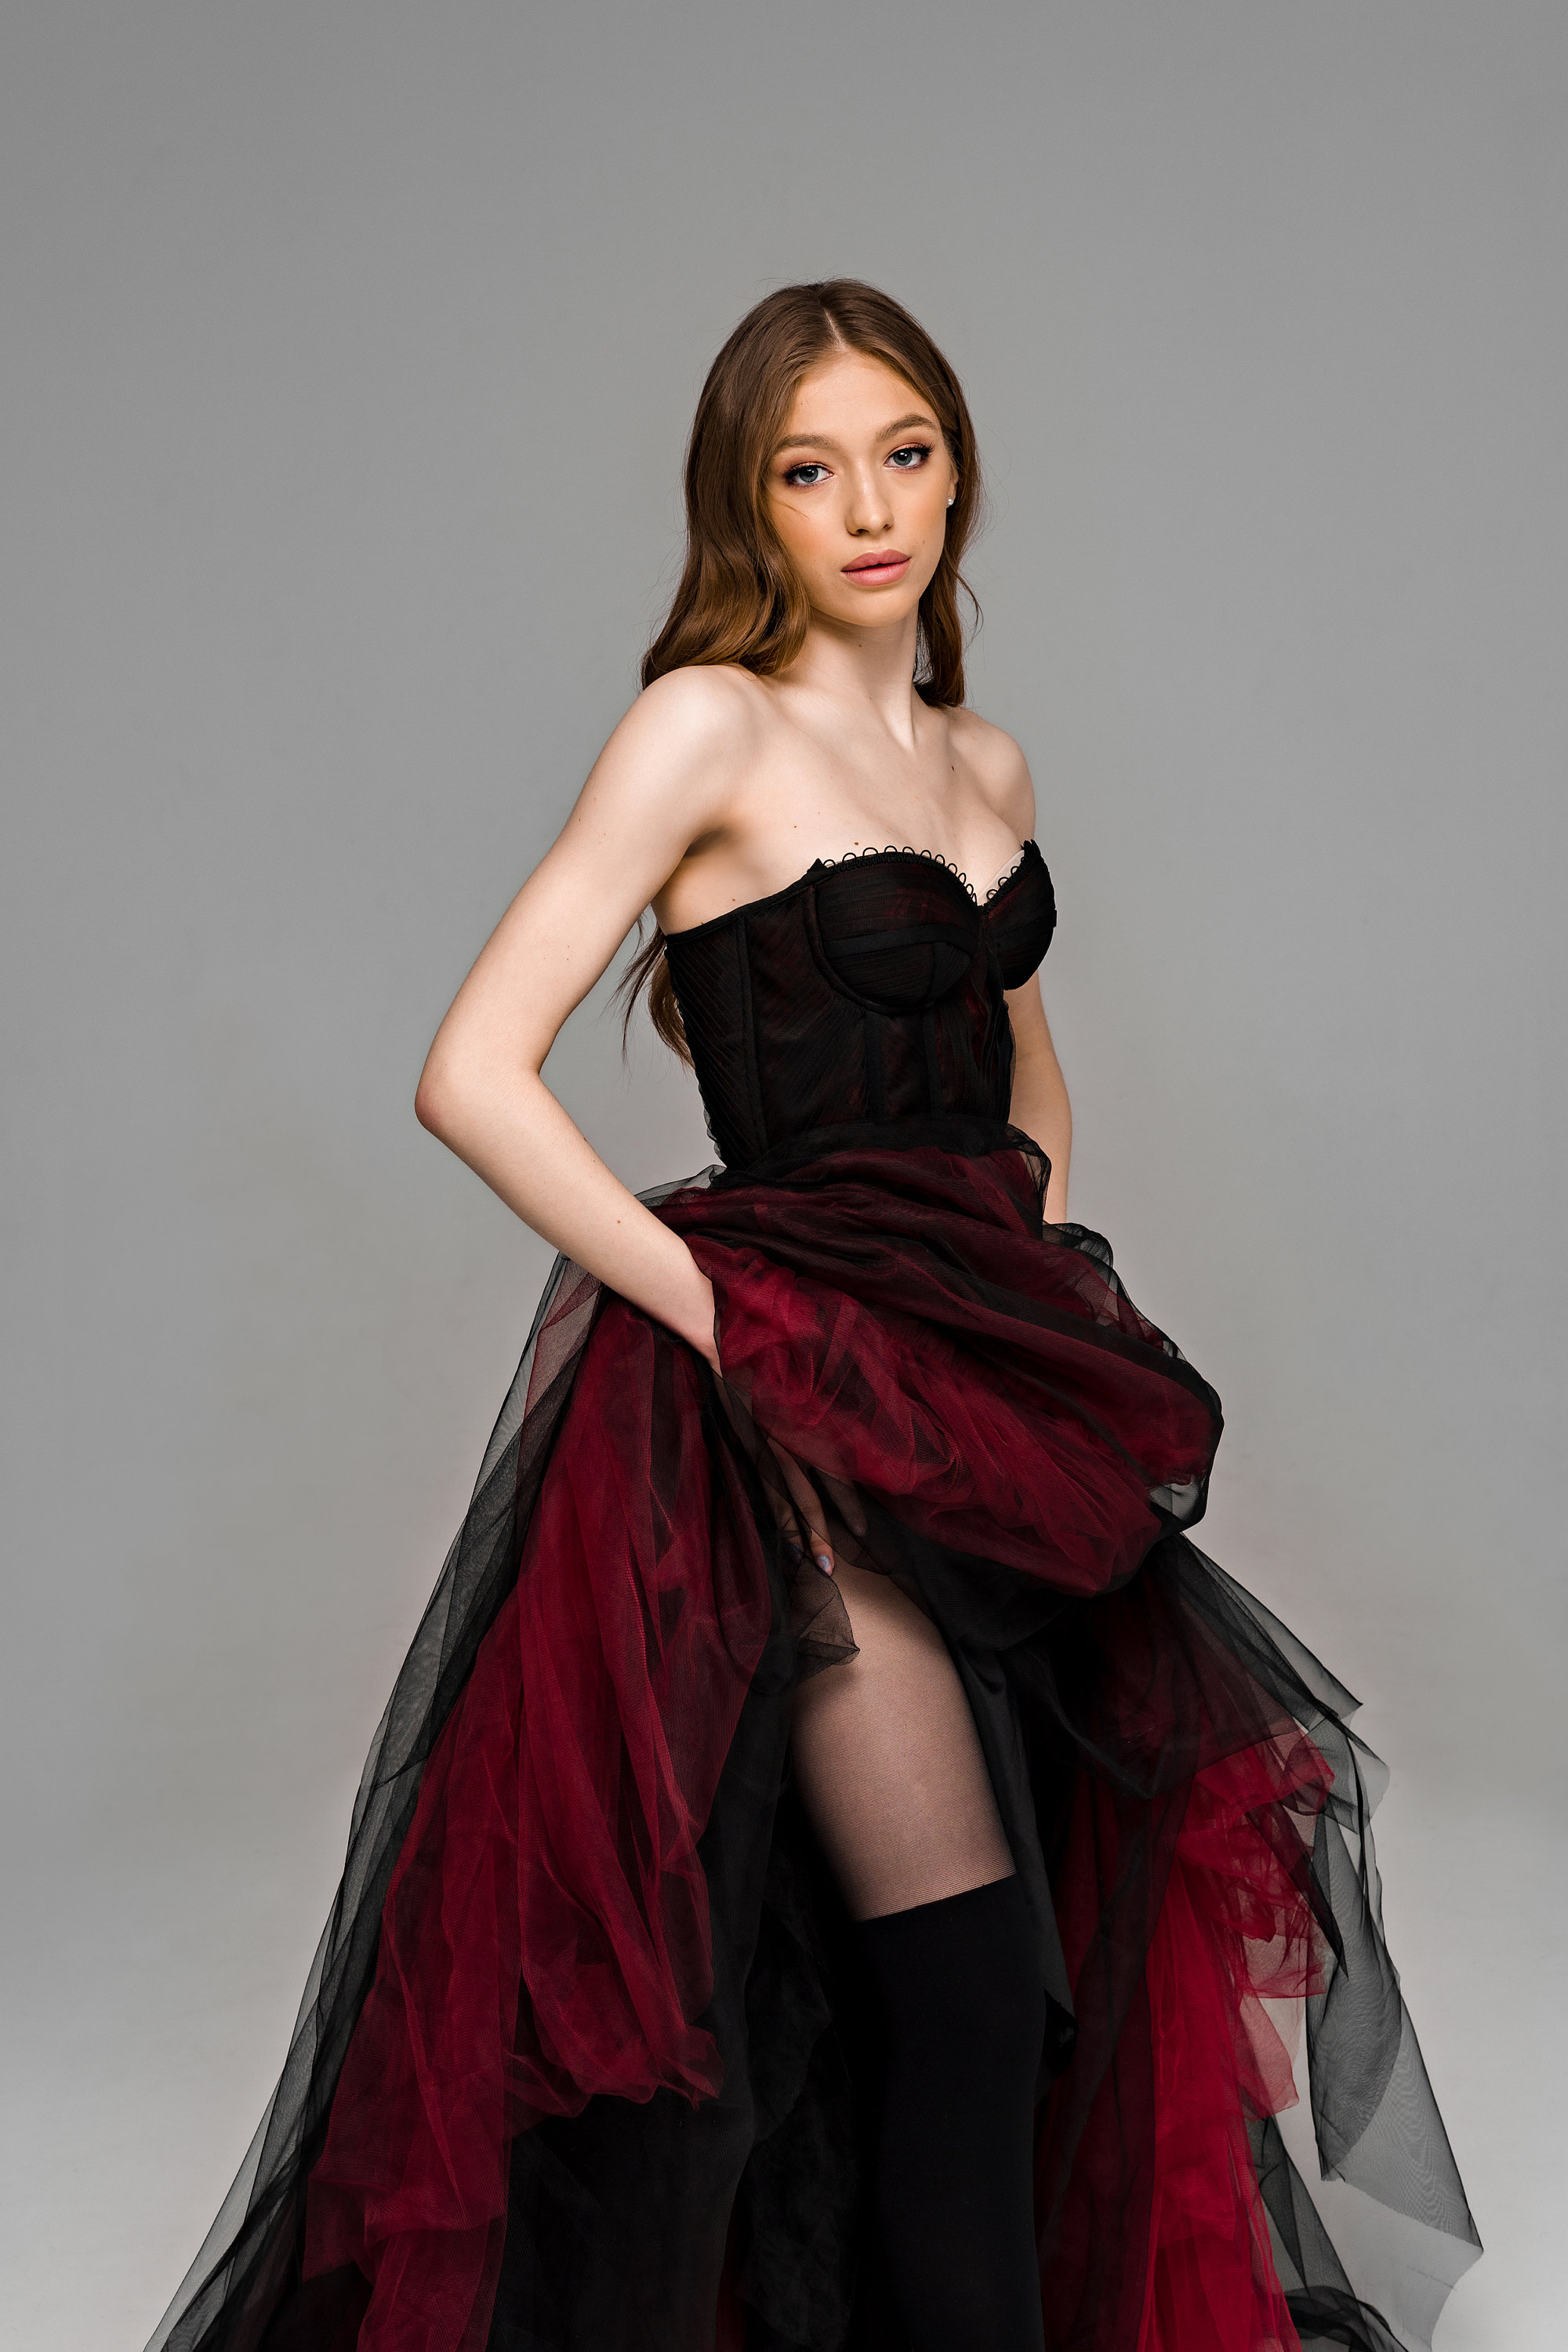 Gothic Black Wedding Dress, Black Red Wedding Dress, Black and Dark Red Gown,  Black Bridal Dress, Wine Red and Black Gothic Dress Halloween -  Canada